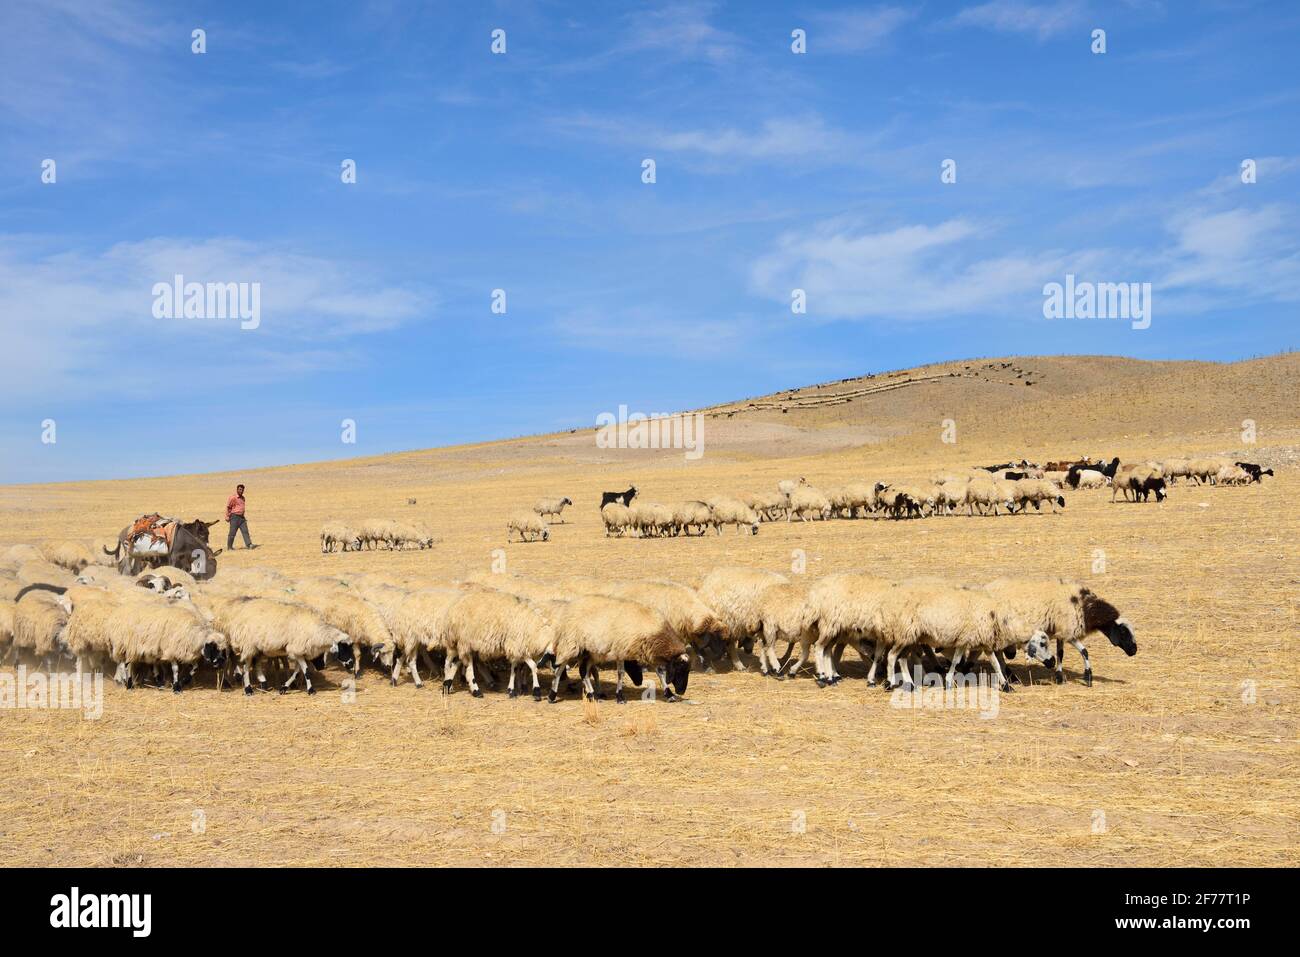 Iran, West Azerbaijan province, Qareh Ziya Eddin region, Kurdish shepherd Stock Photo